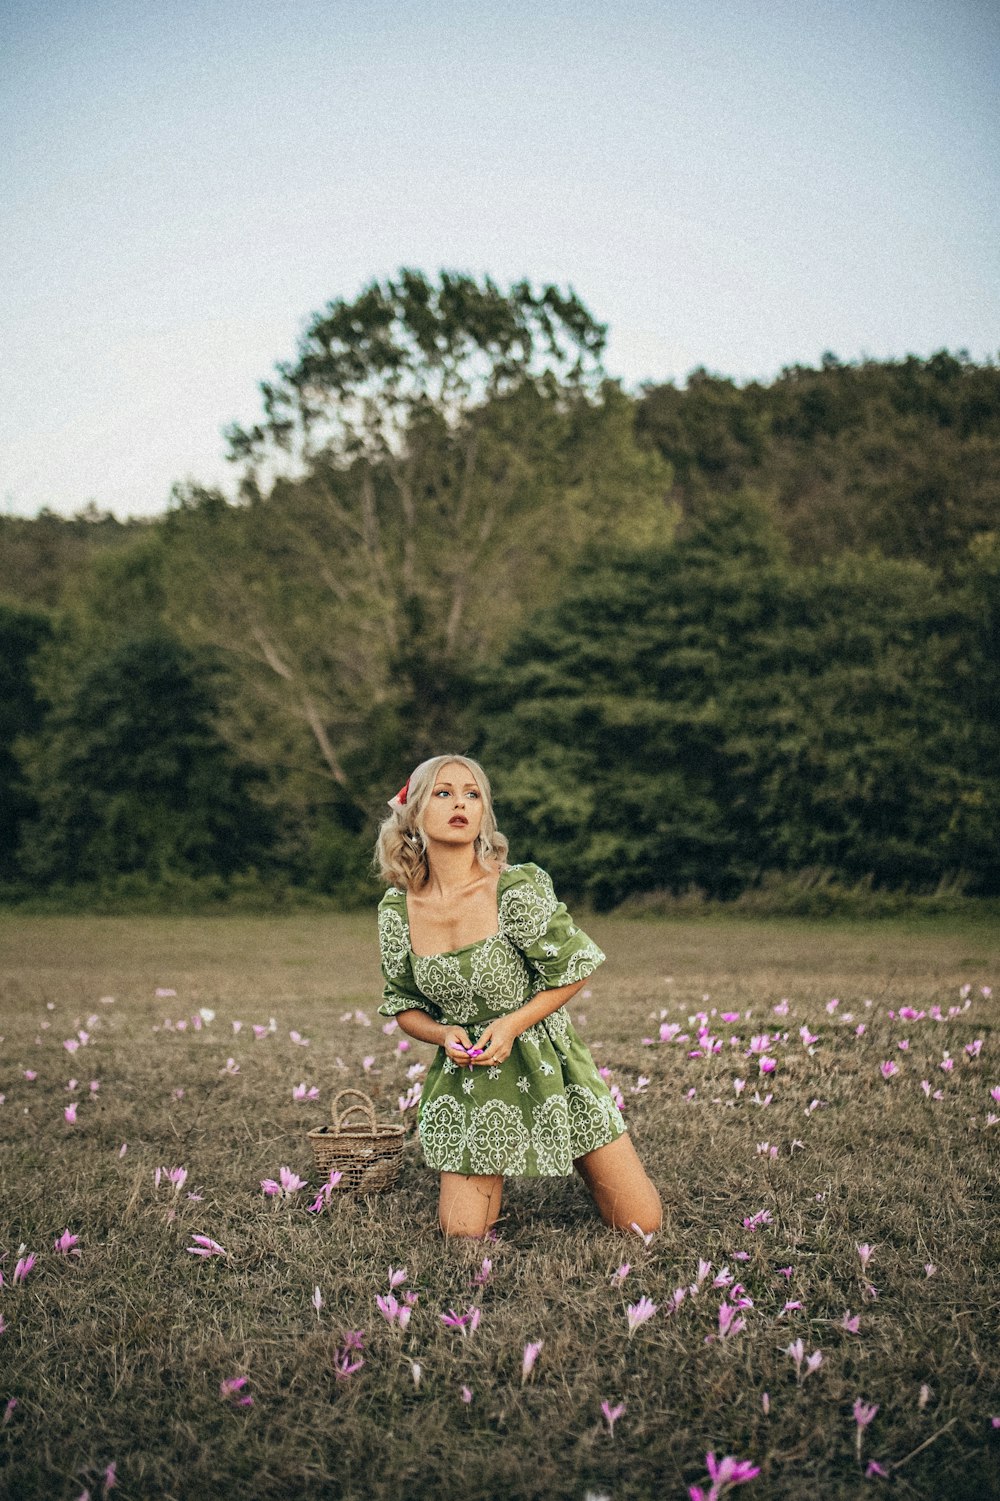 girl in green dress standing on purple flower field during daytime